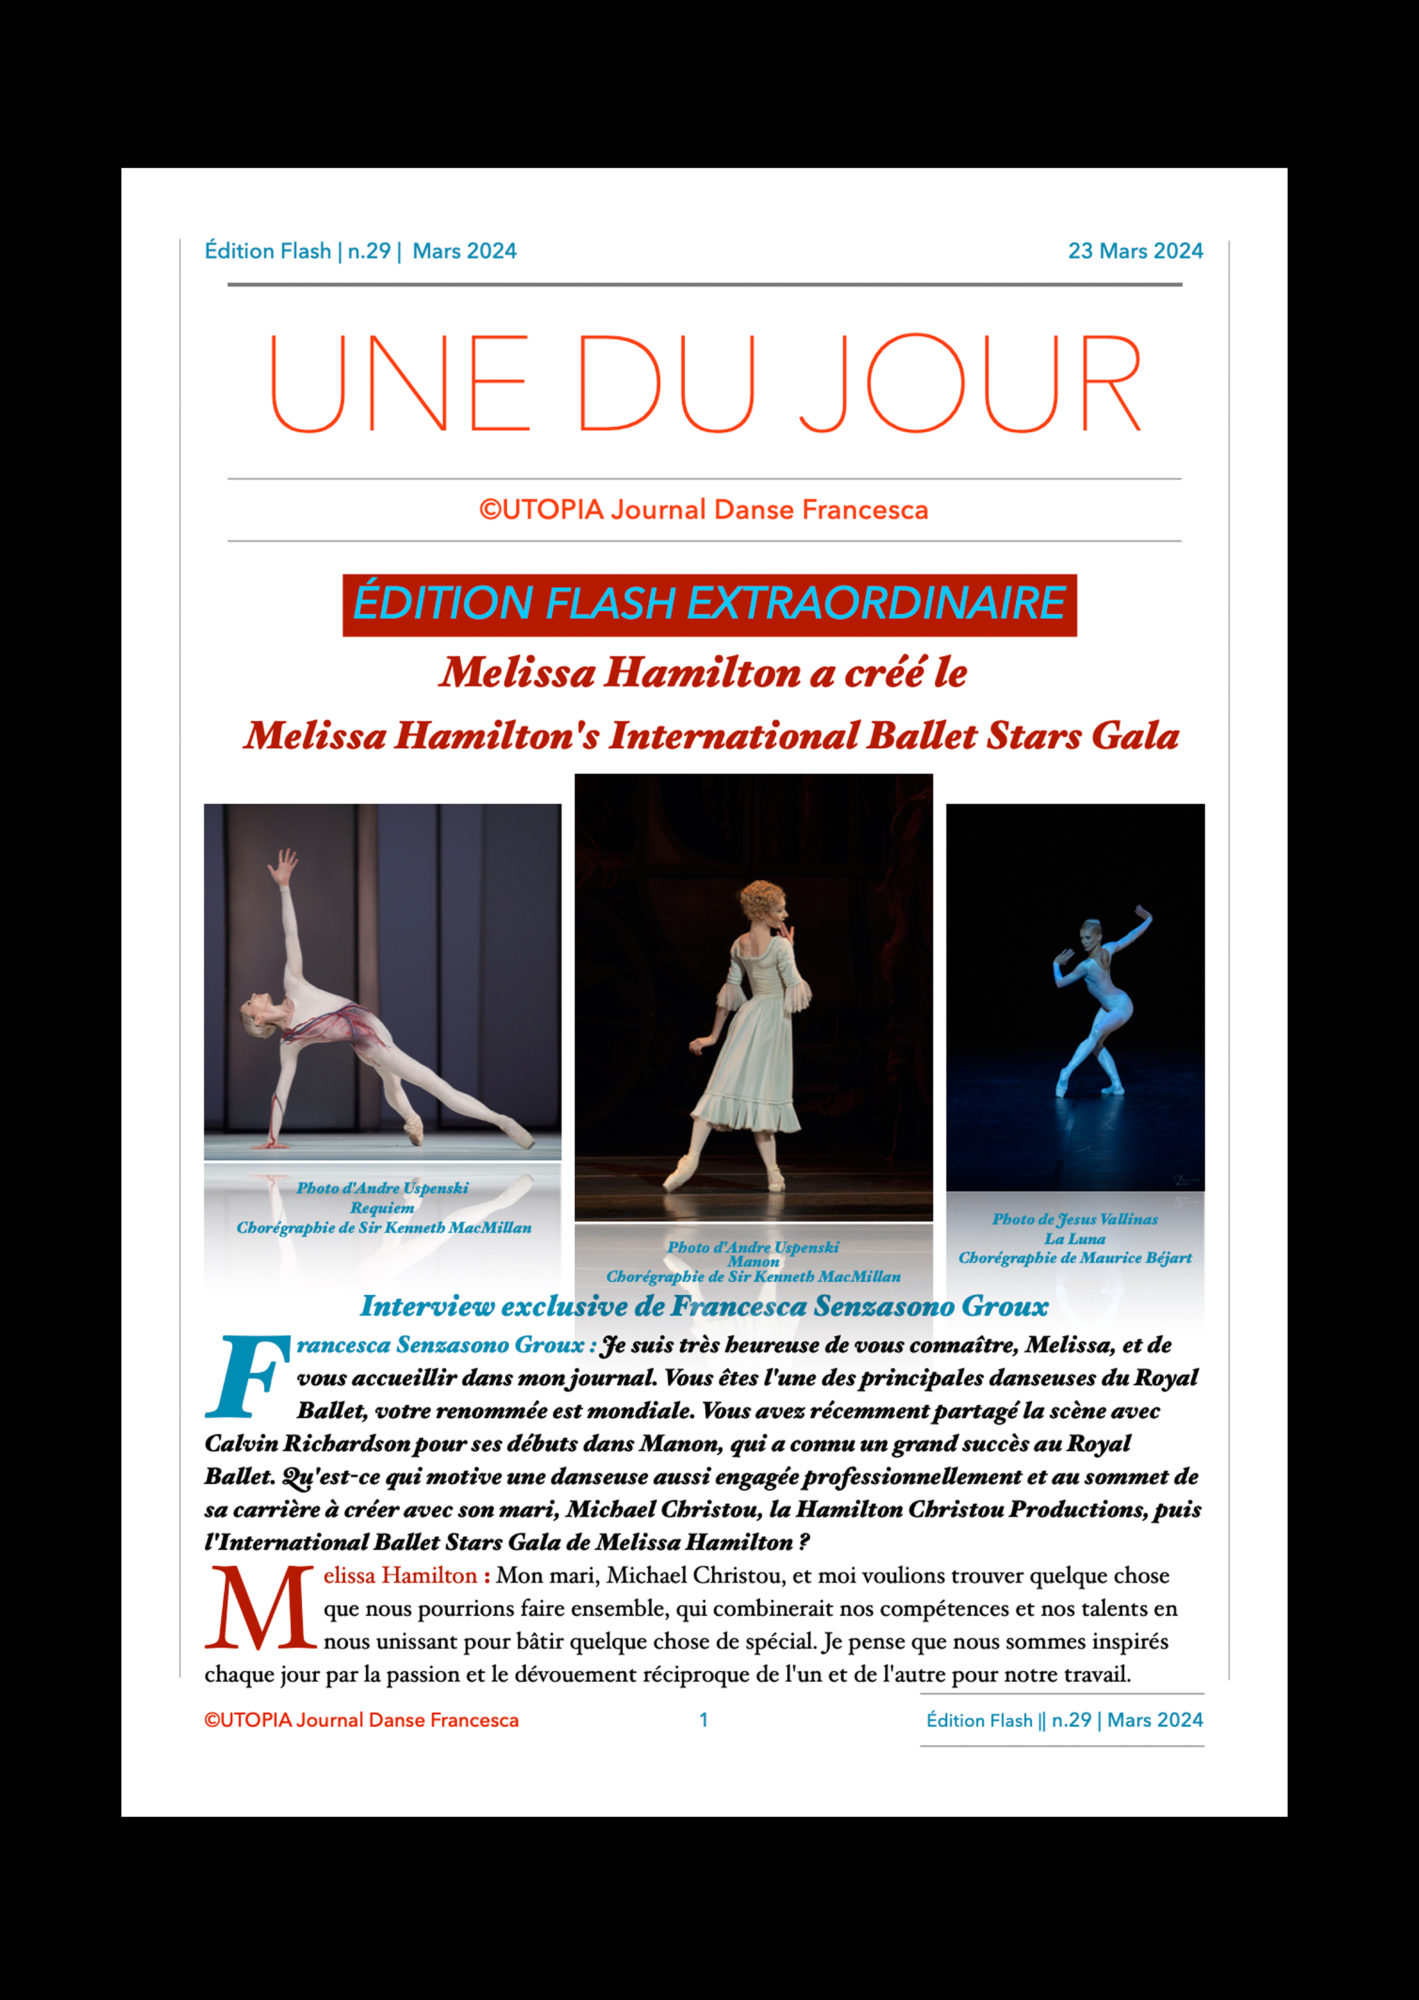 ©UTOPIA Journal Danse Francesca Edition Flash Extraordinaire n.29 23 Mars 2024 page 1